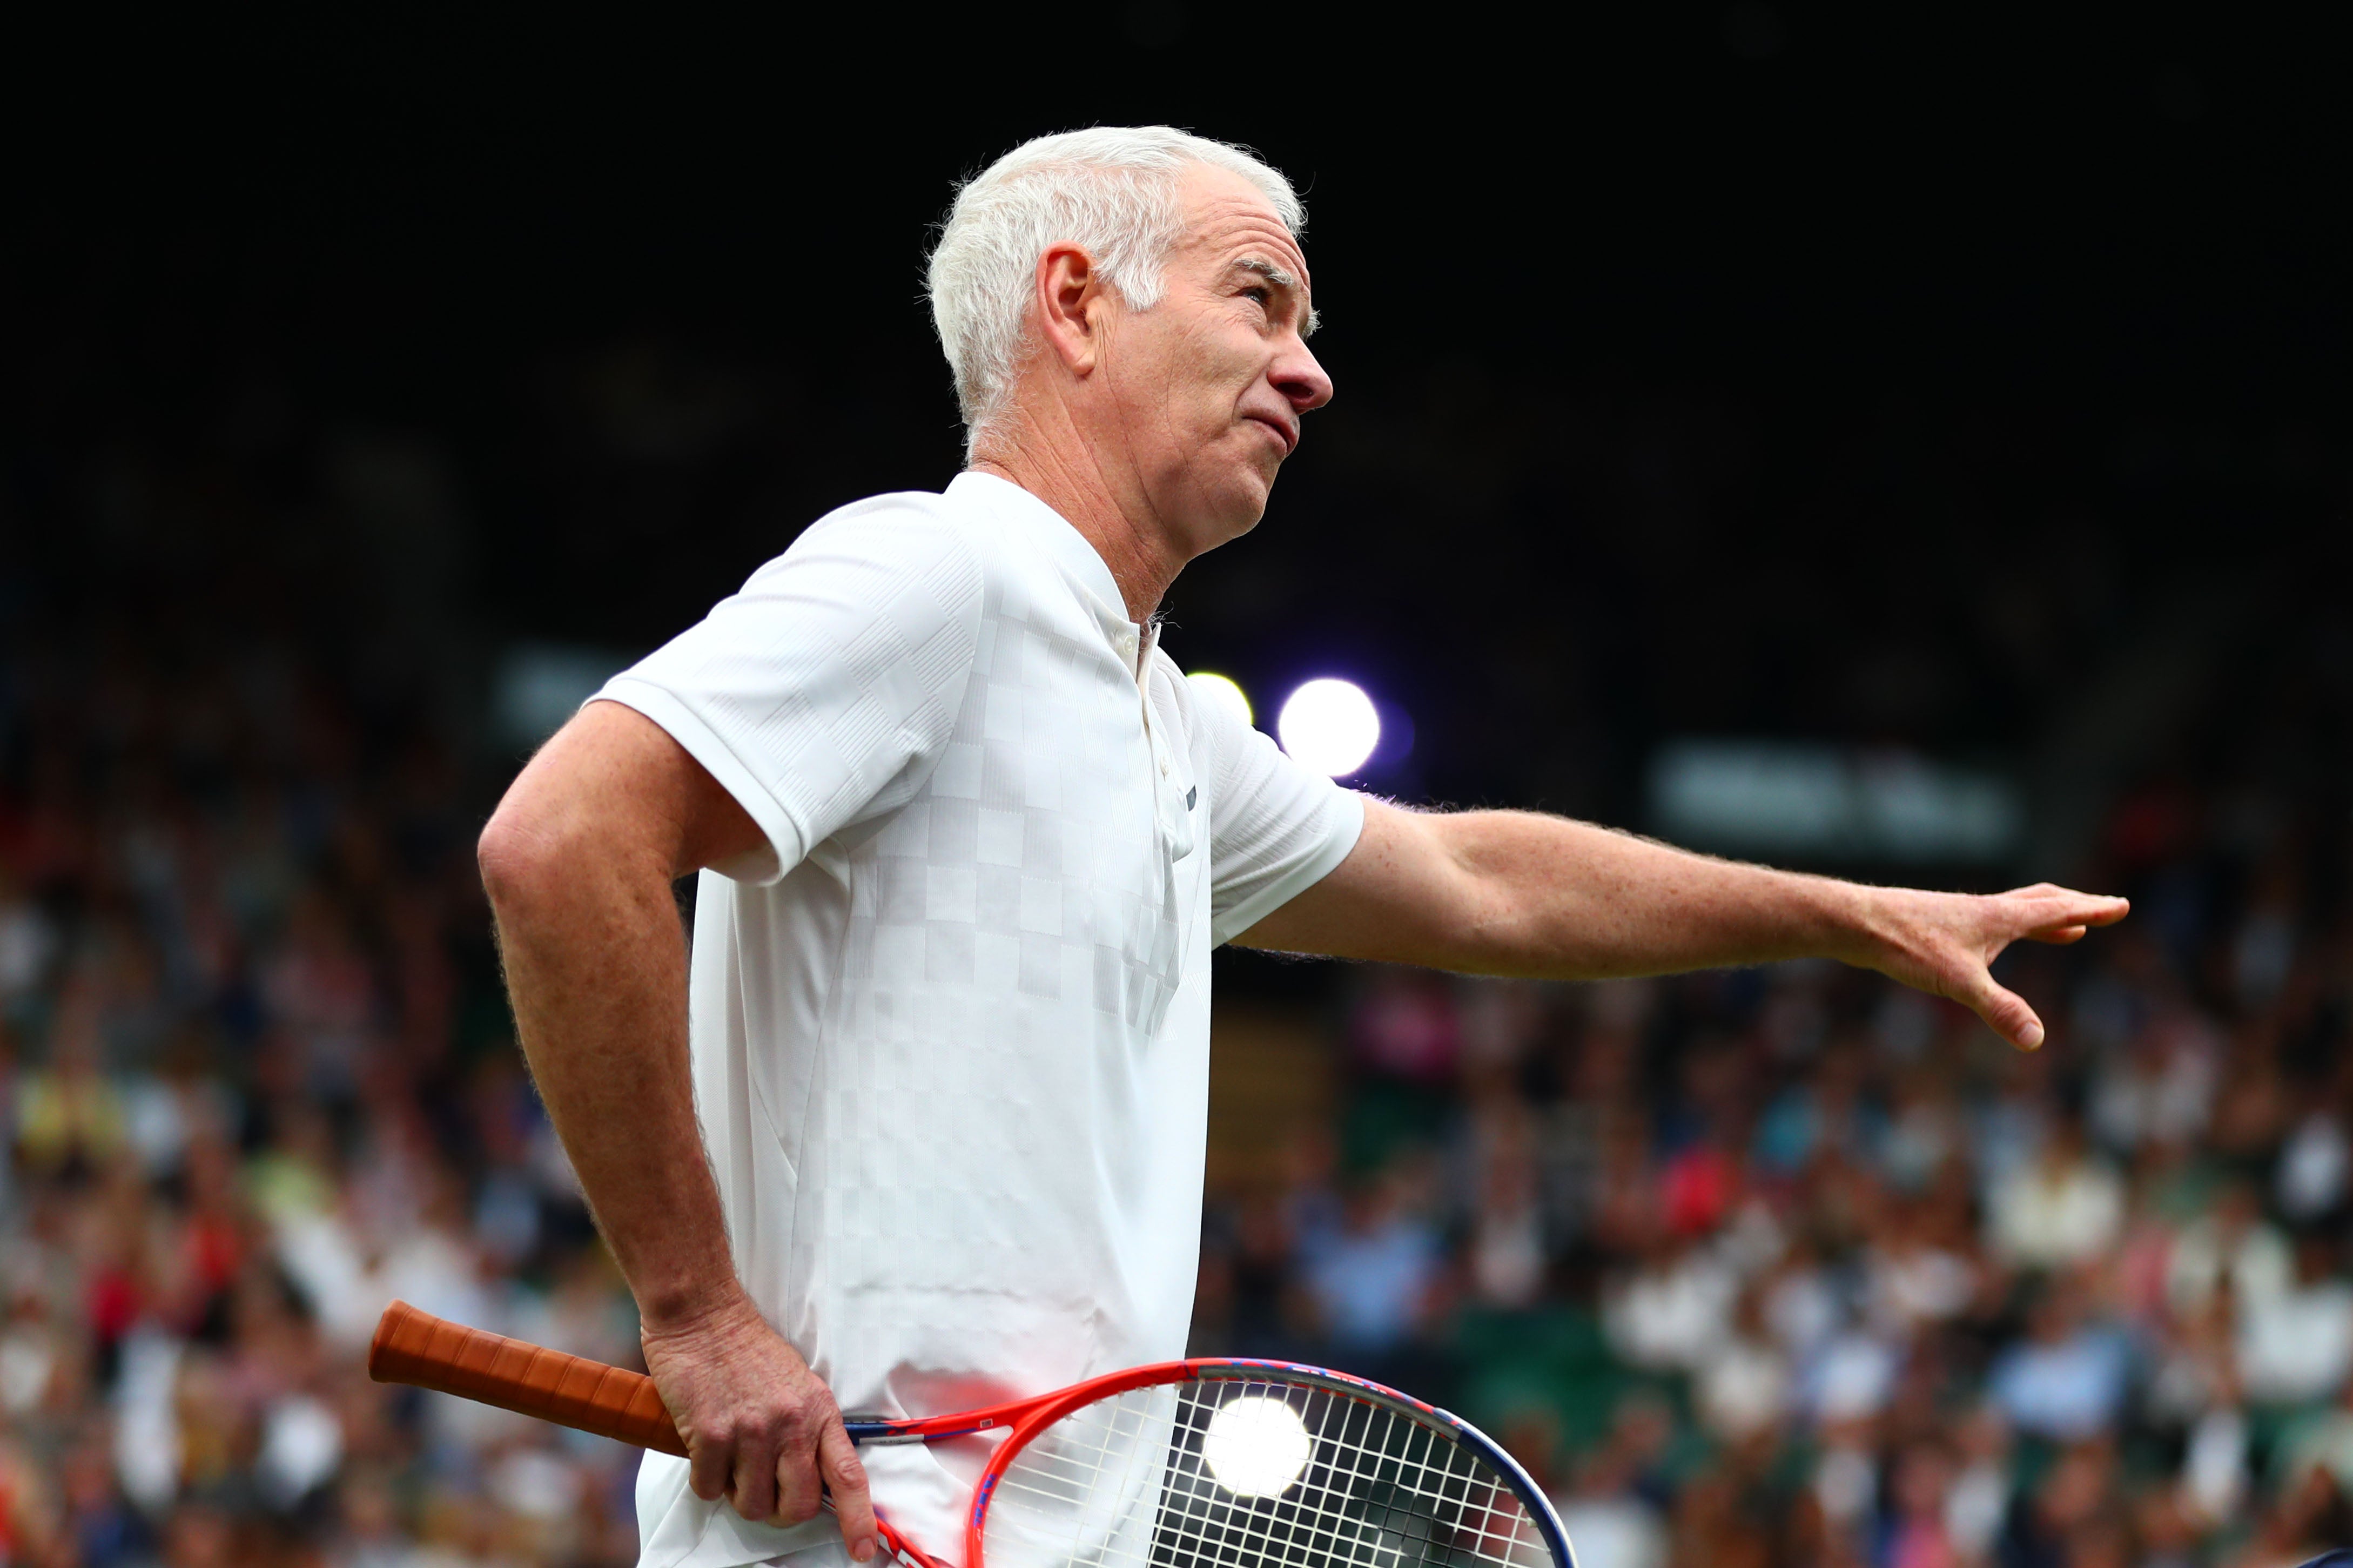 John McEnroe won Wimbledon three times in the 1980s